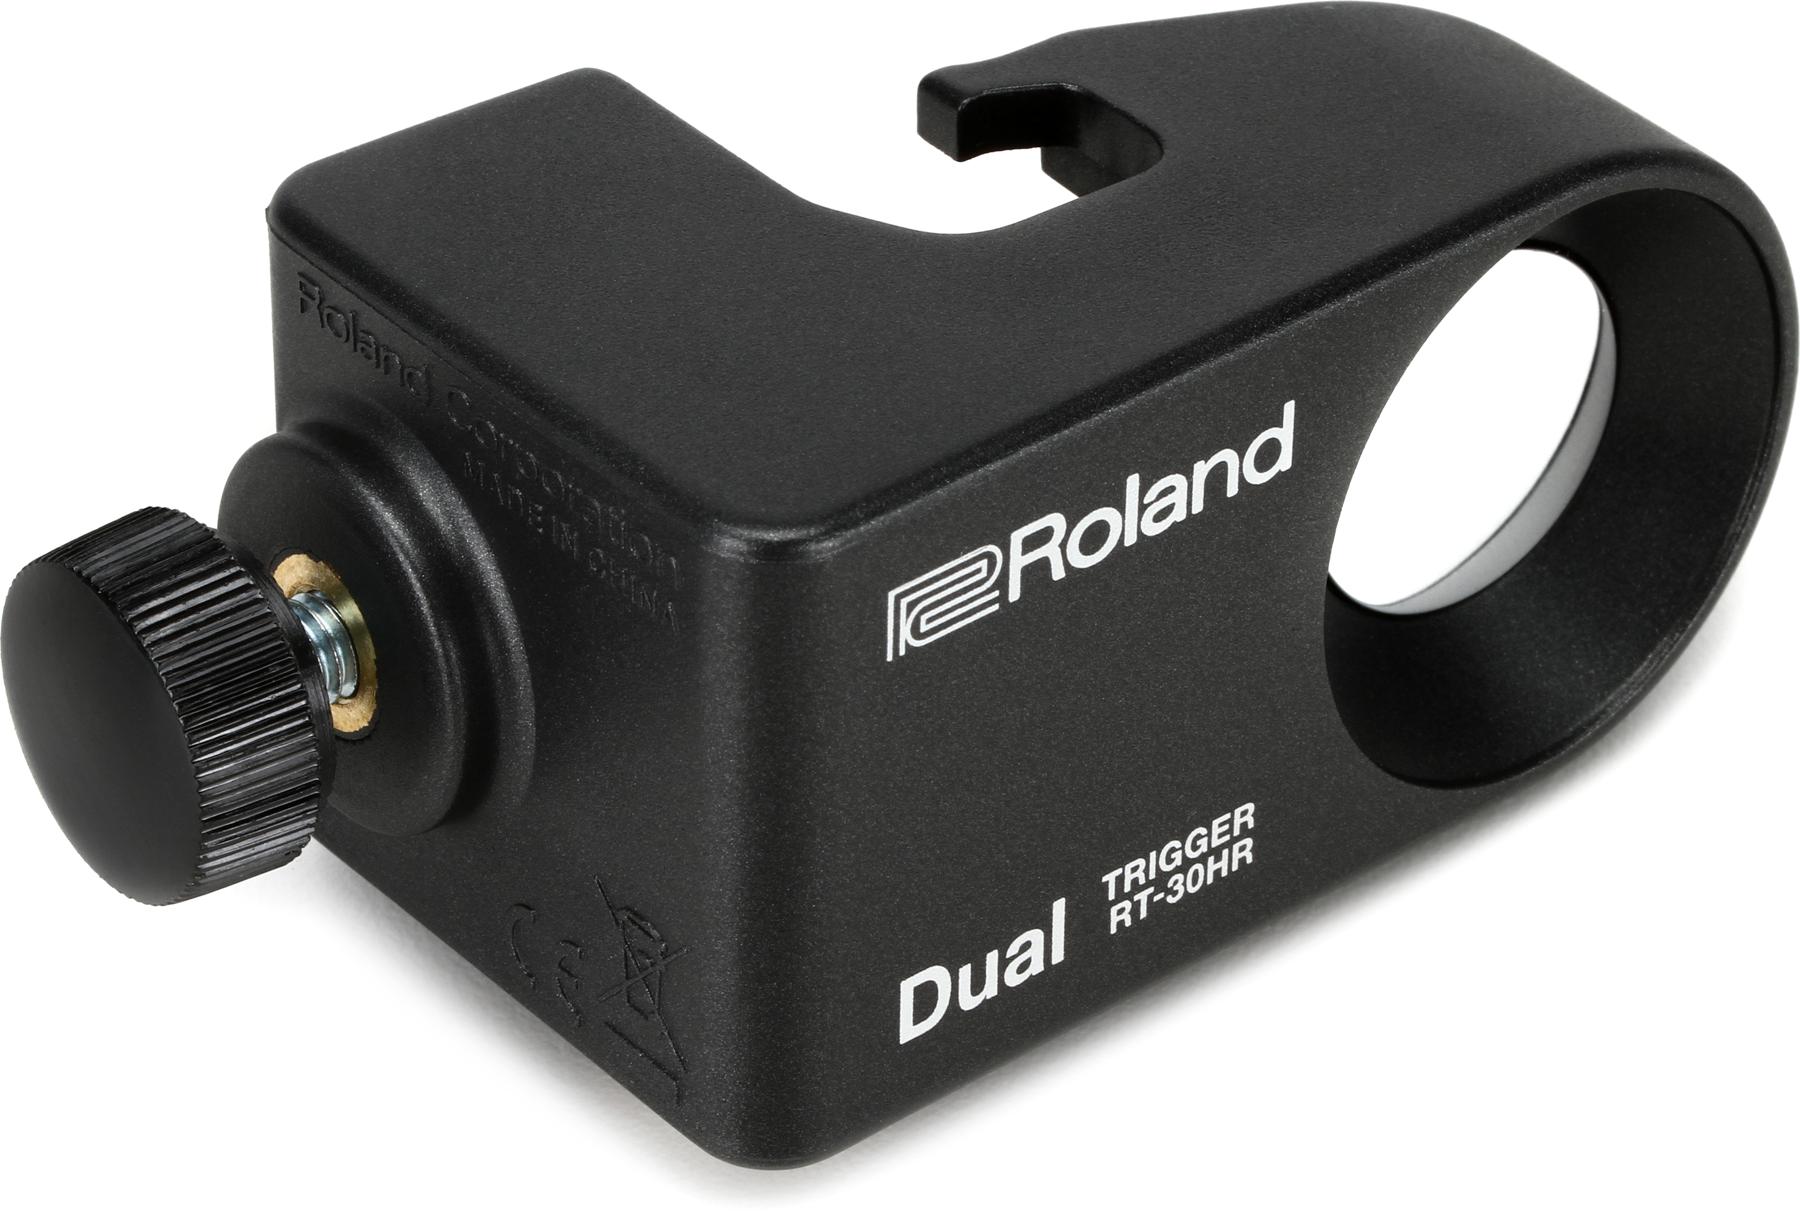 1. Roland Dual Trigger (RT-30HR)